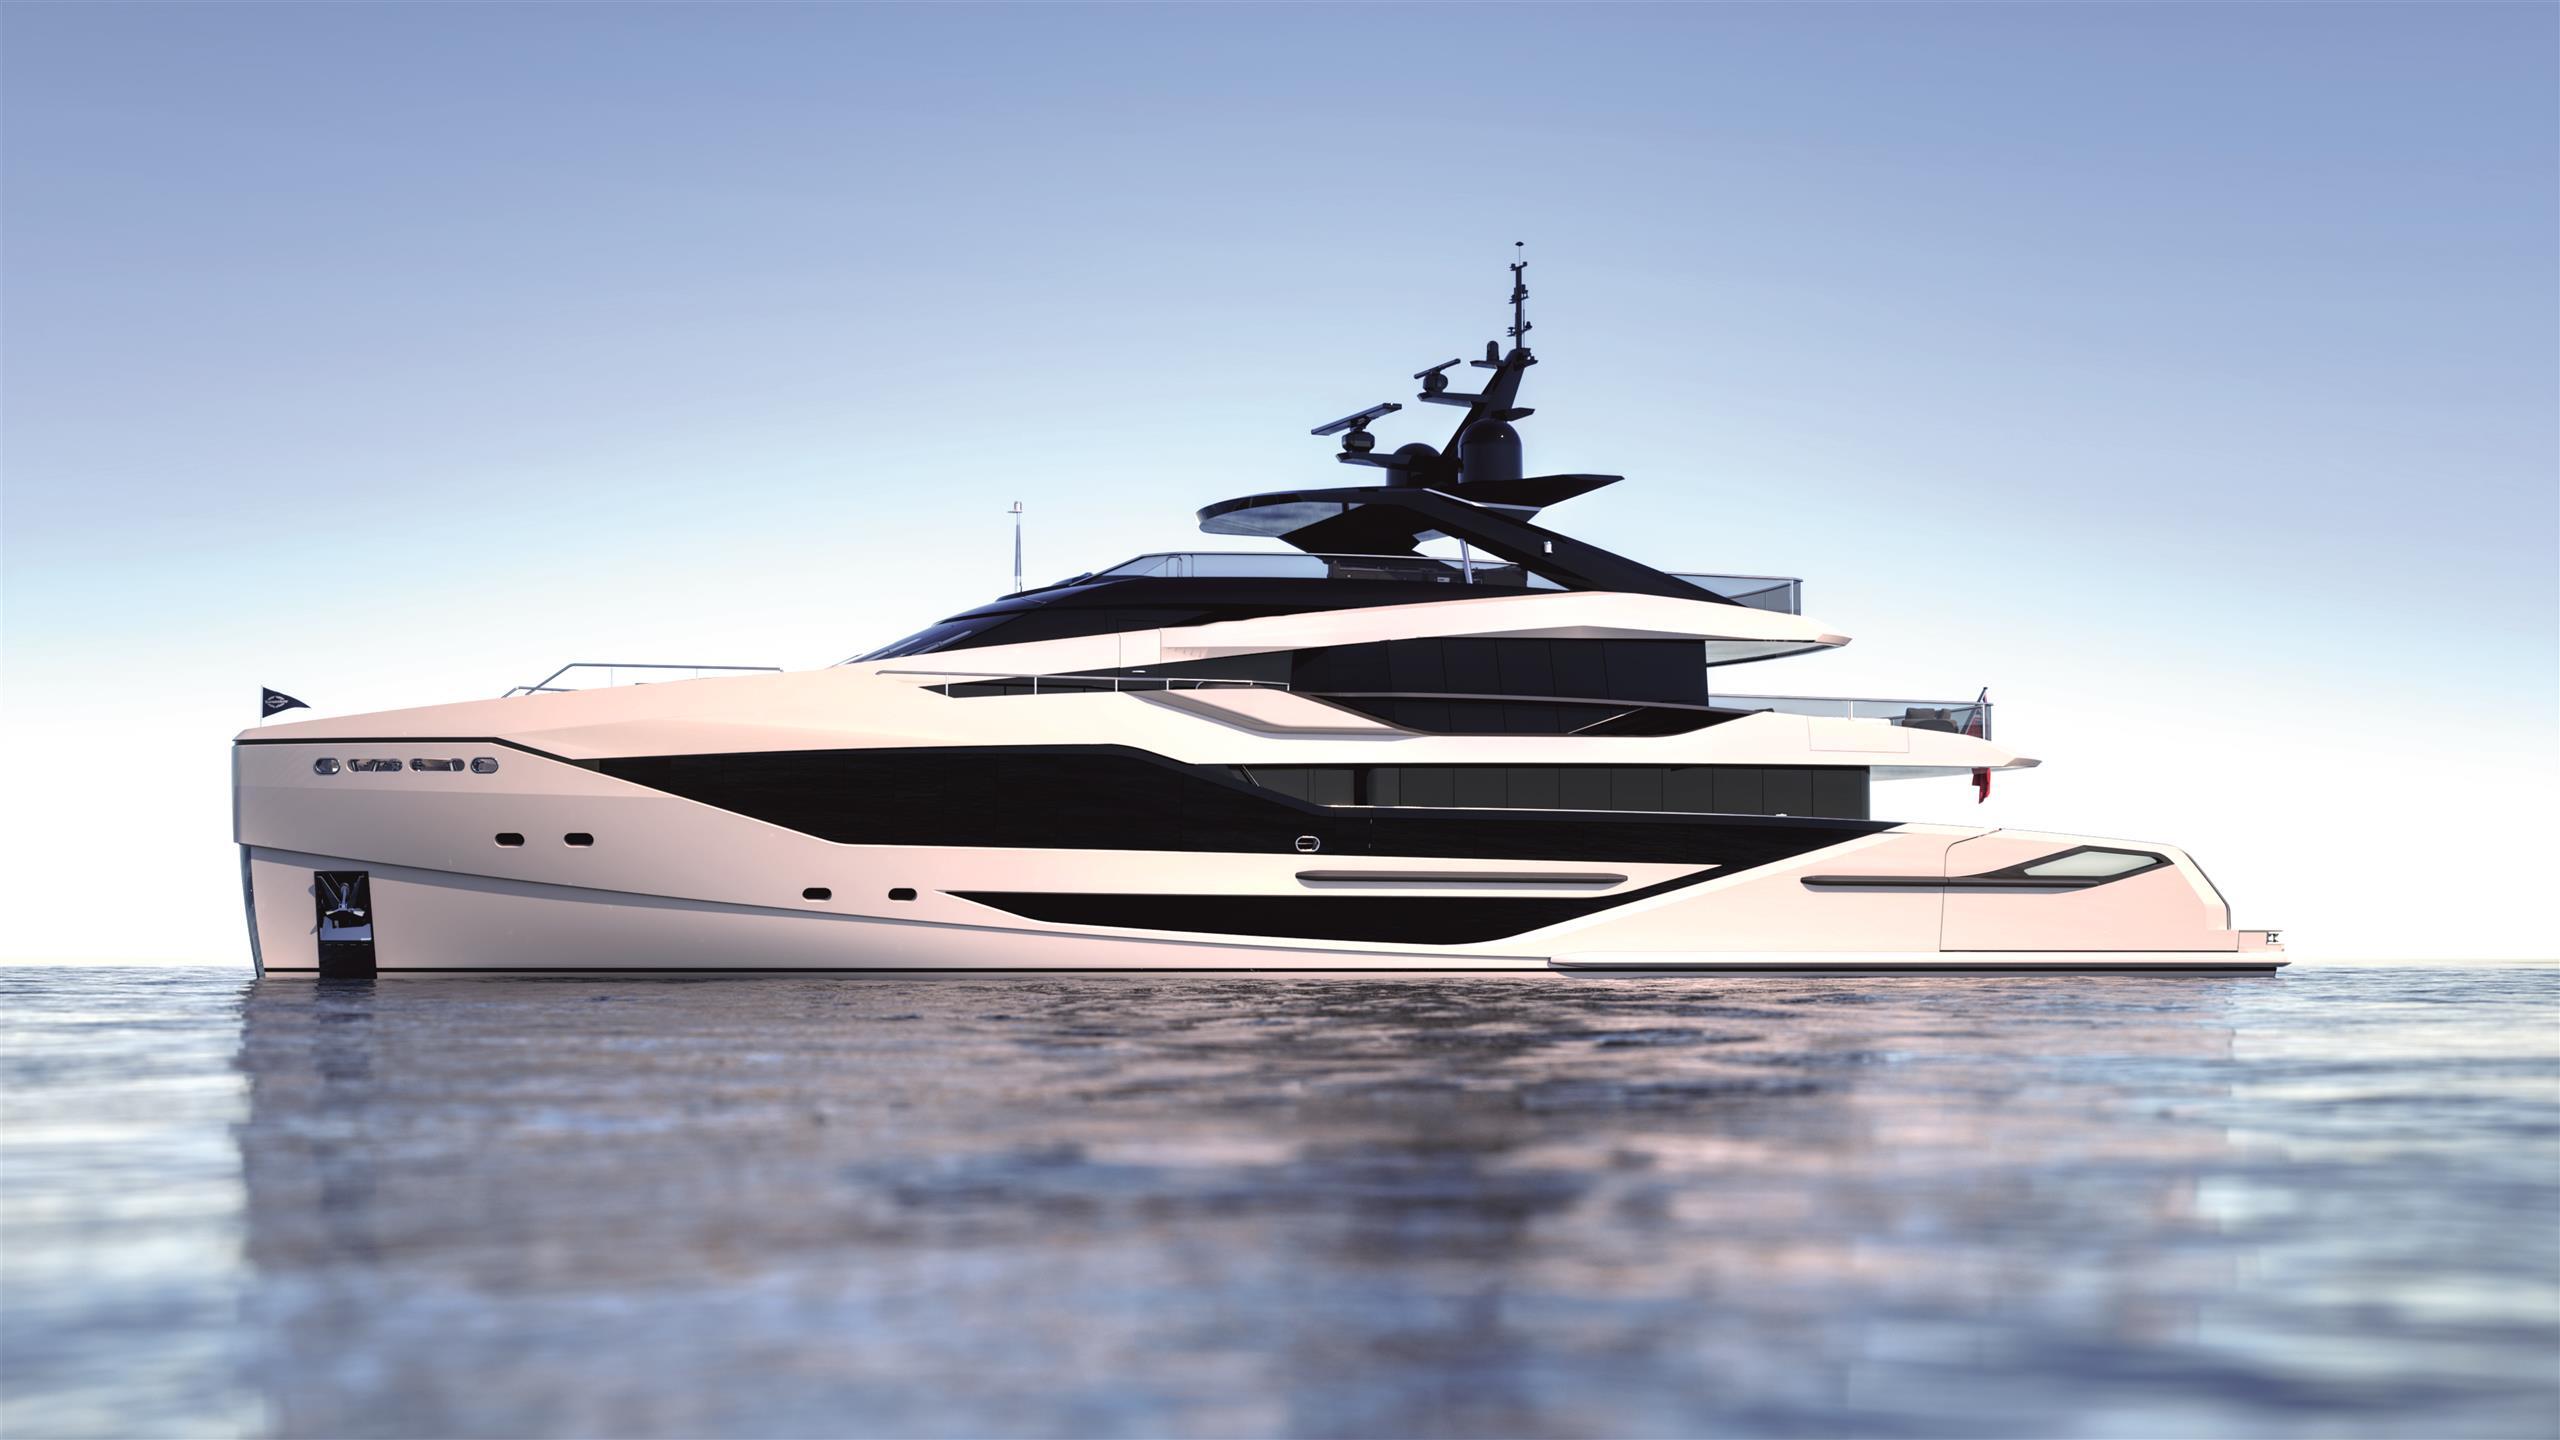 sunseeker reveals new tri deck semi displacement superyacht the spectacular ocean 460 6337a6a4b9774